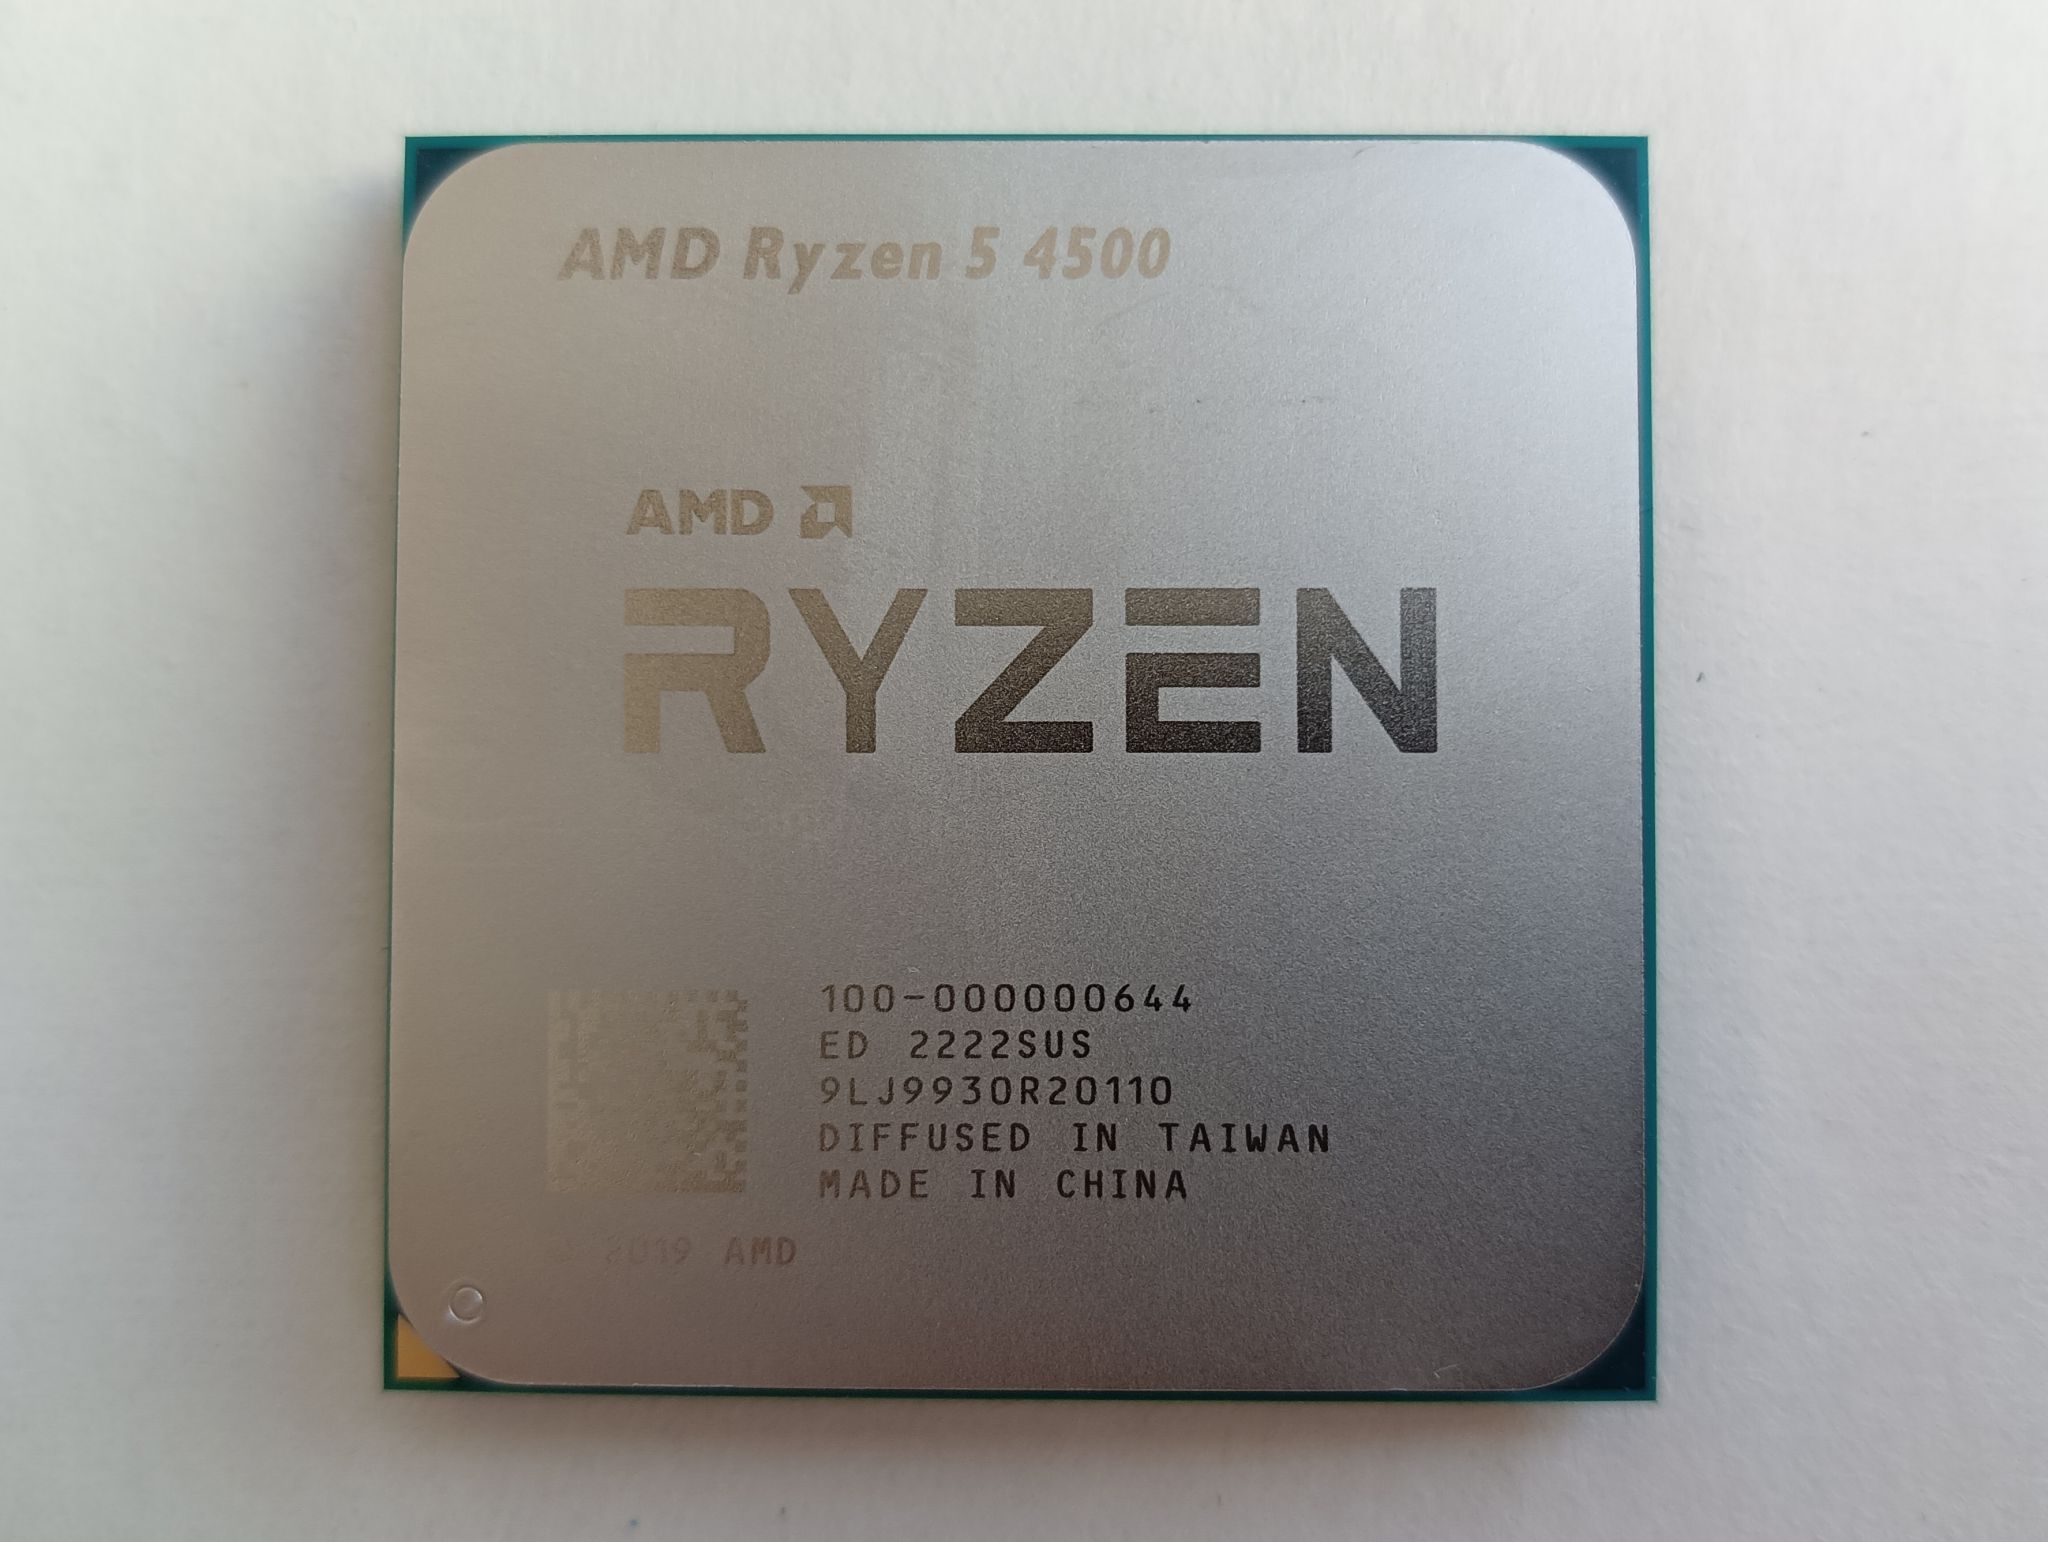 Ryzen 5 2600 купить. AMD Ryzen 5 3400g am4, 4 x 3700 МГЦ.